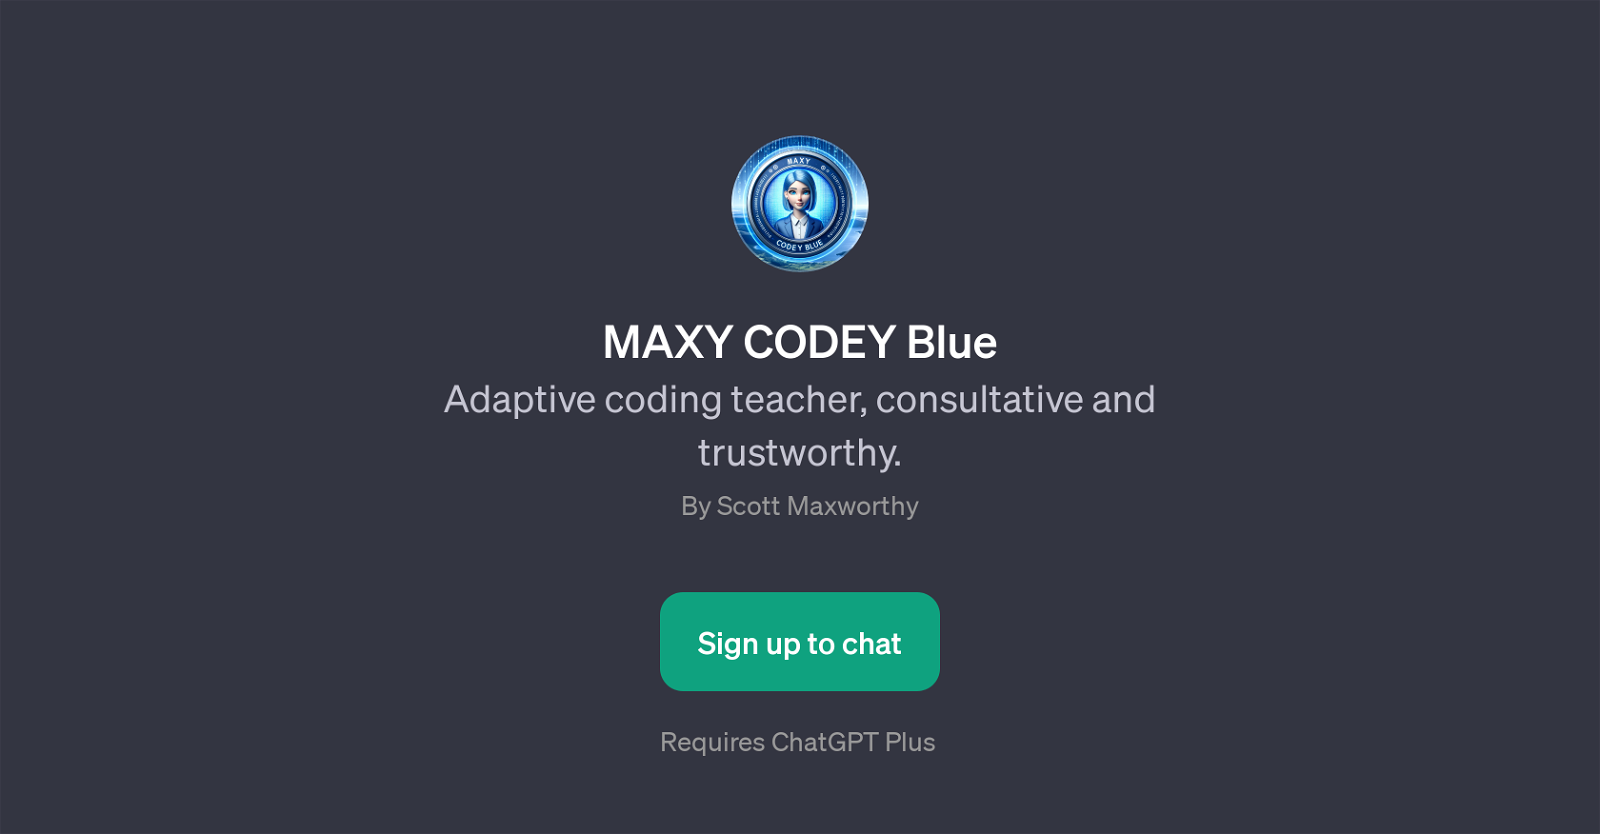 MAXY CODEY Blue website